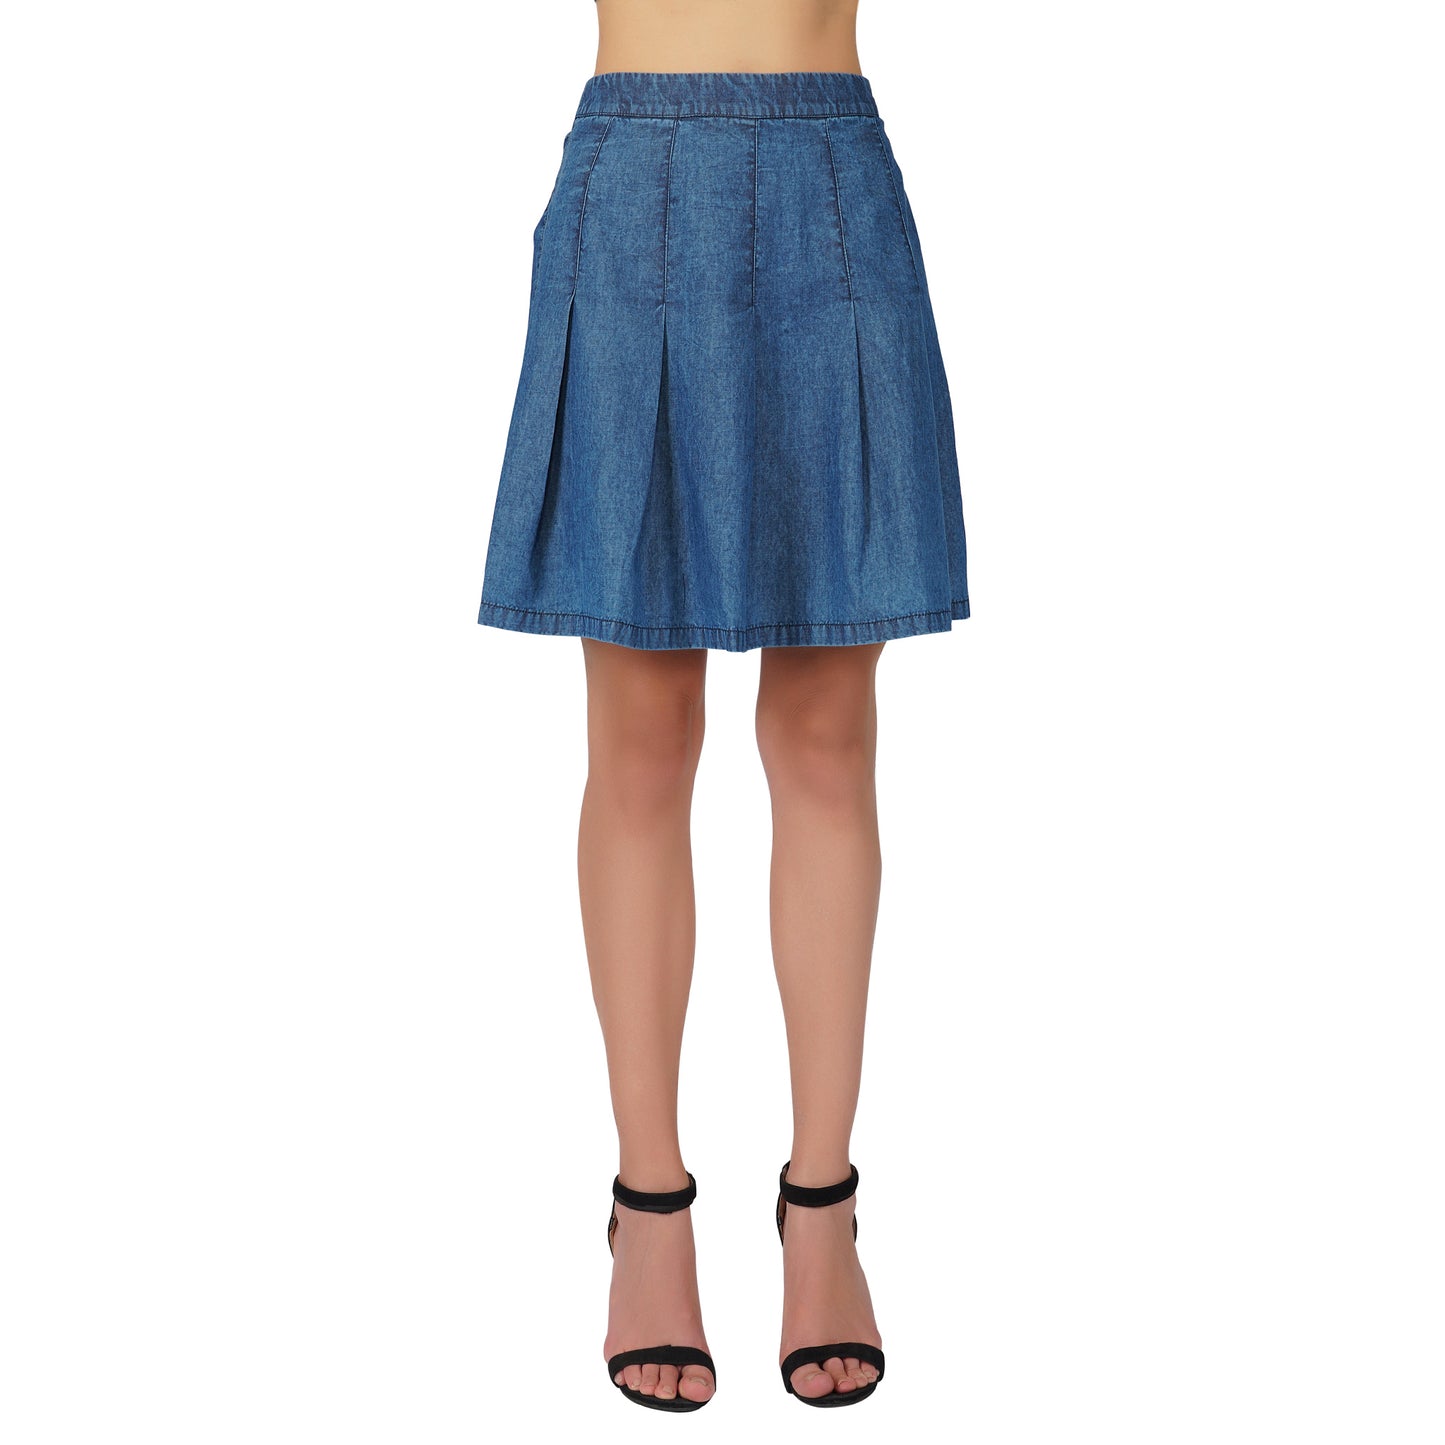 SLAY. Women's Denim Corset Top & Skirt Co-ord Set